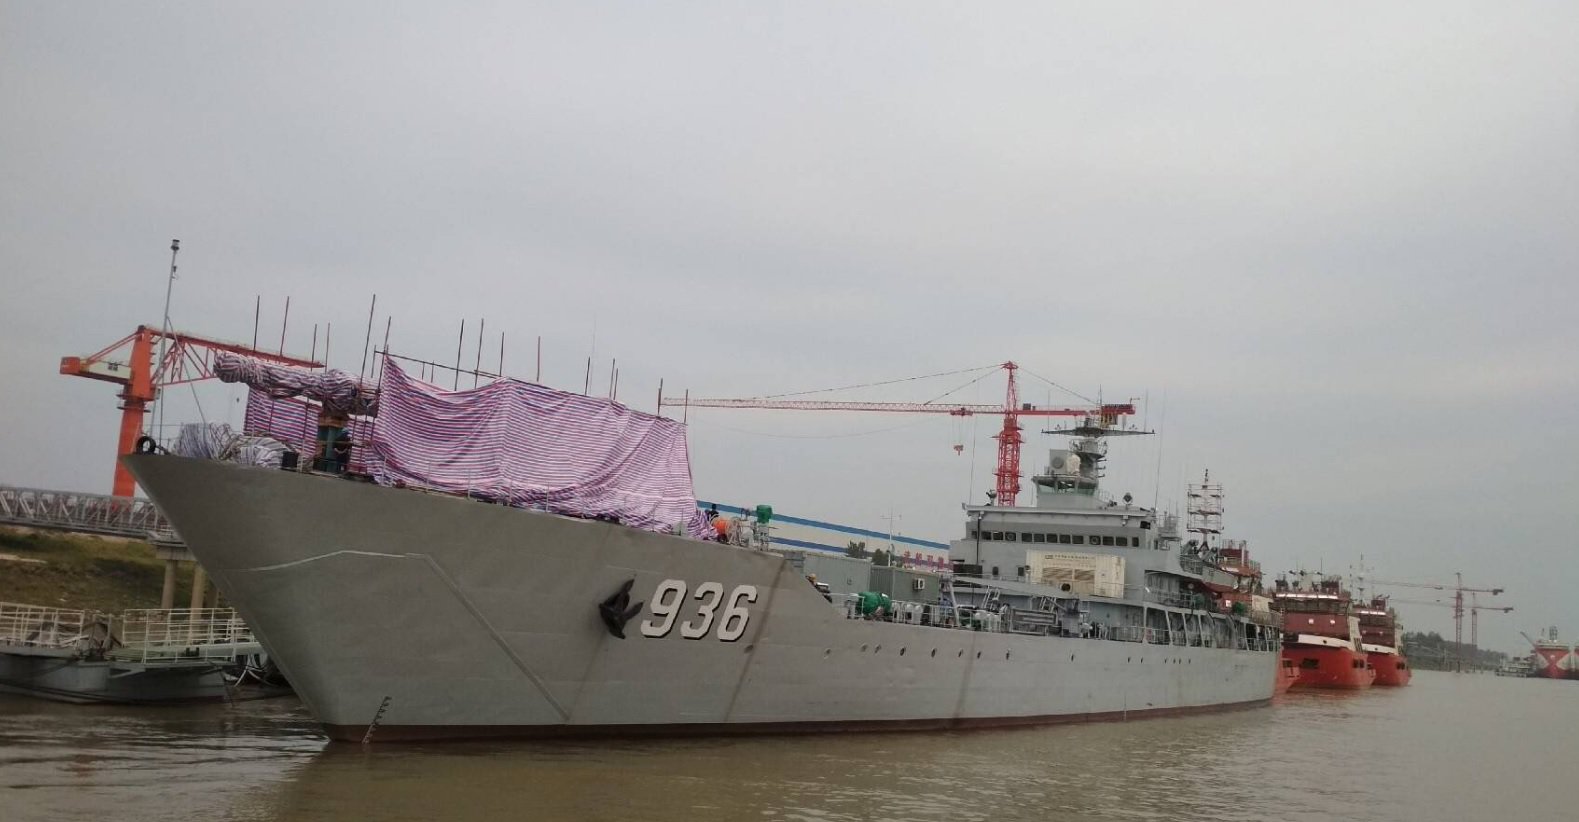 China is preparing for sea trials of a railgun